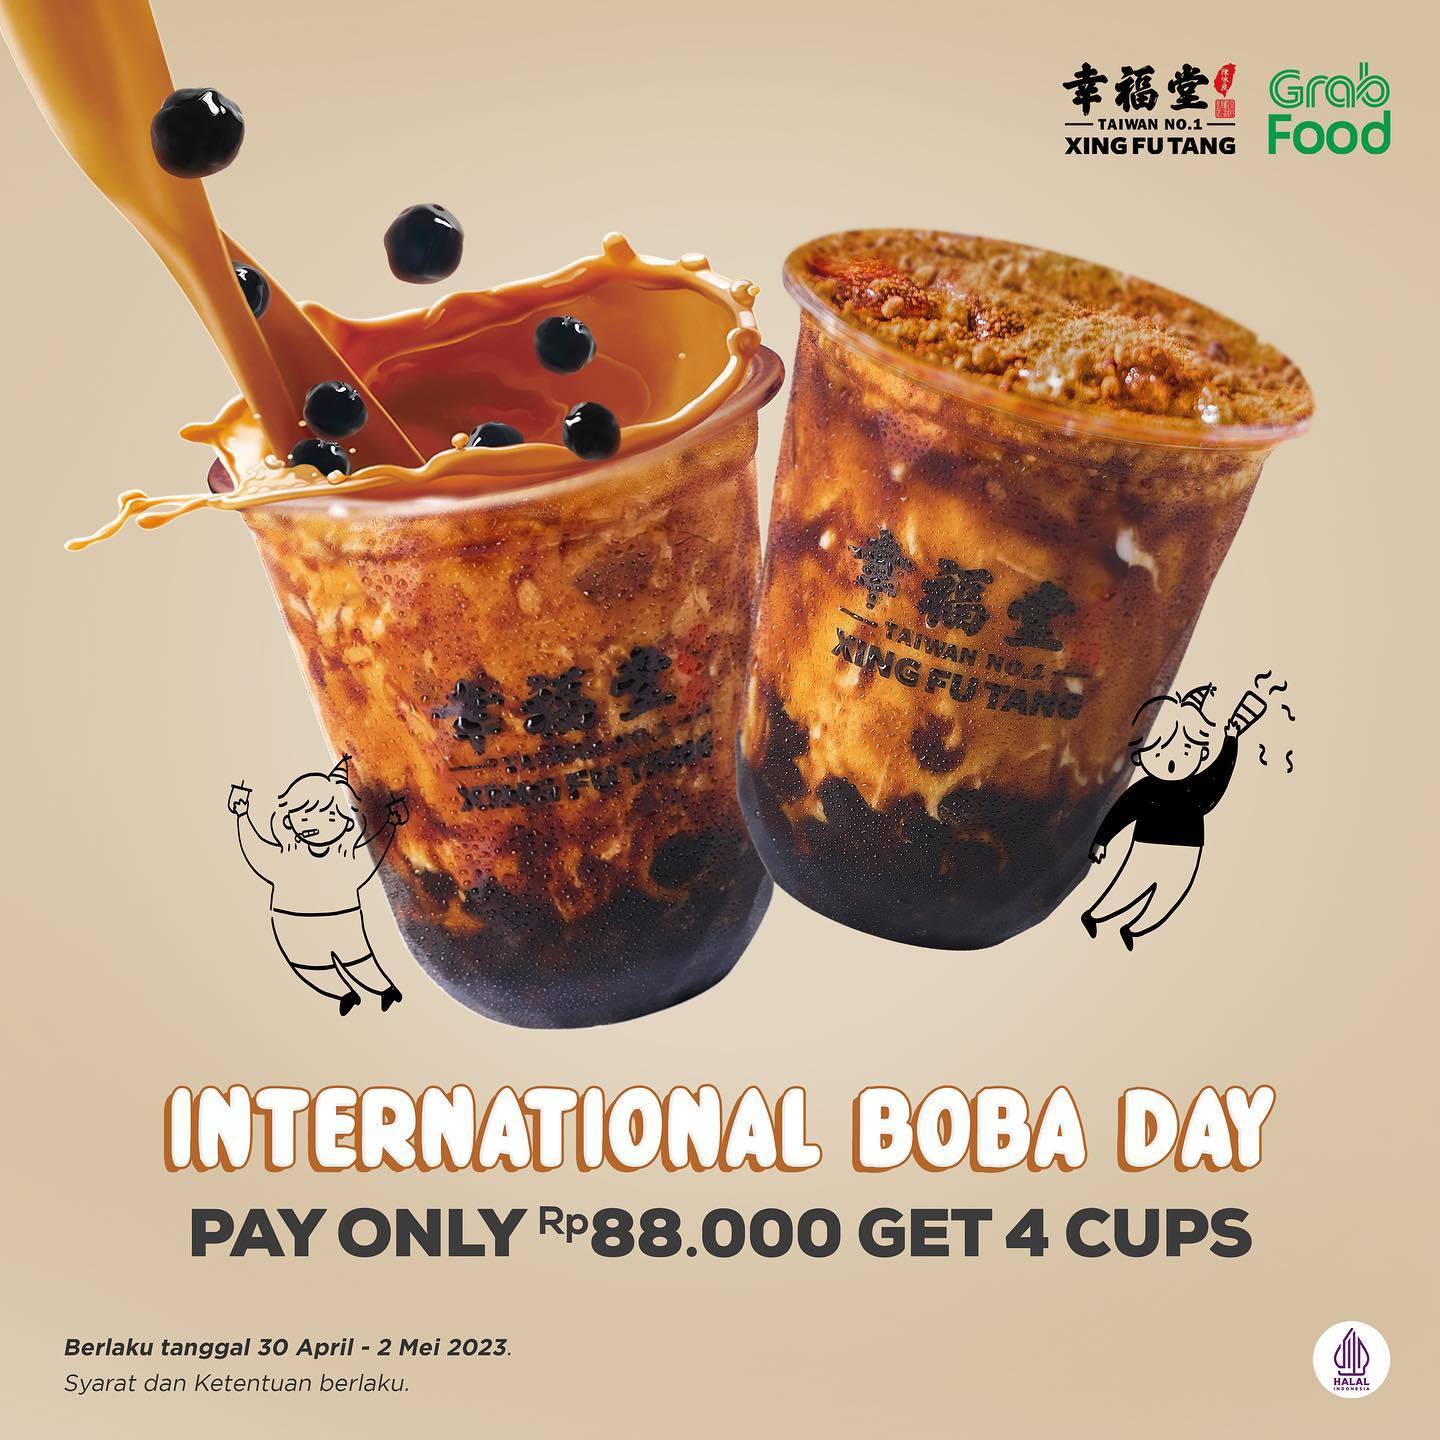 Promo XING FU TANG GRABFOOD International Boba Day! Beli 4 cups cuma Rp. 88.000